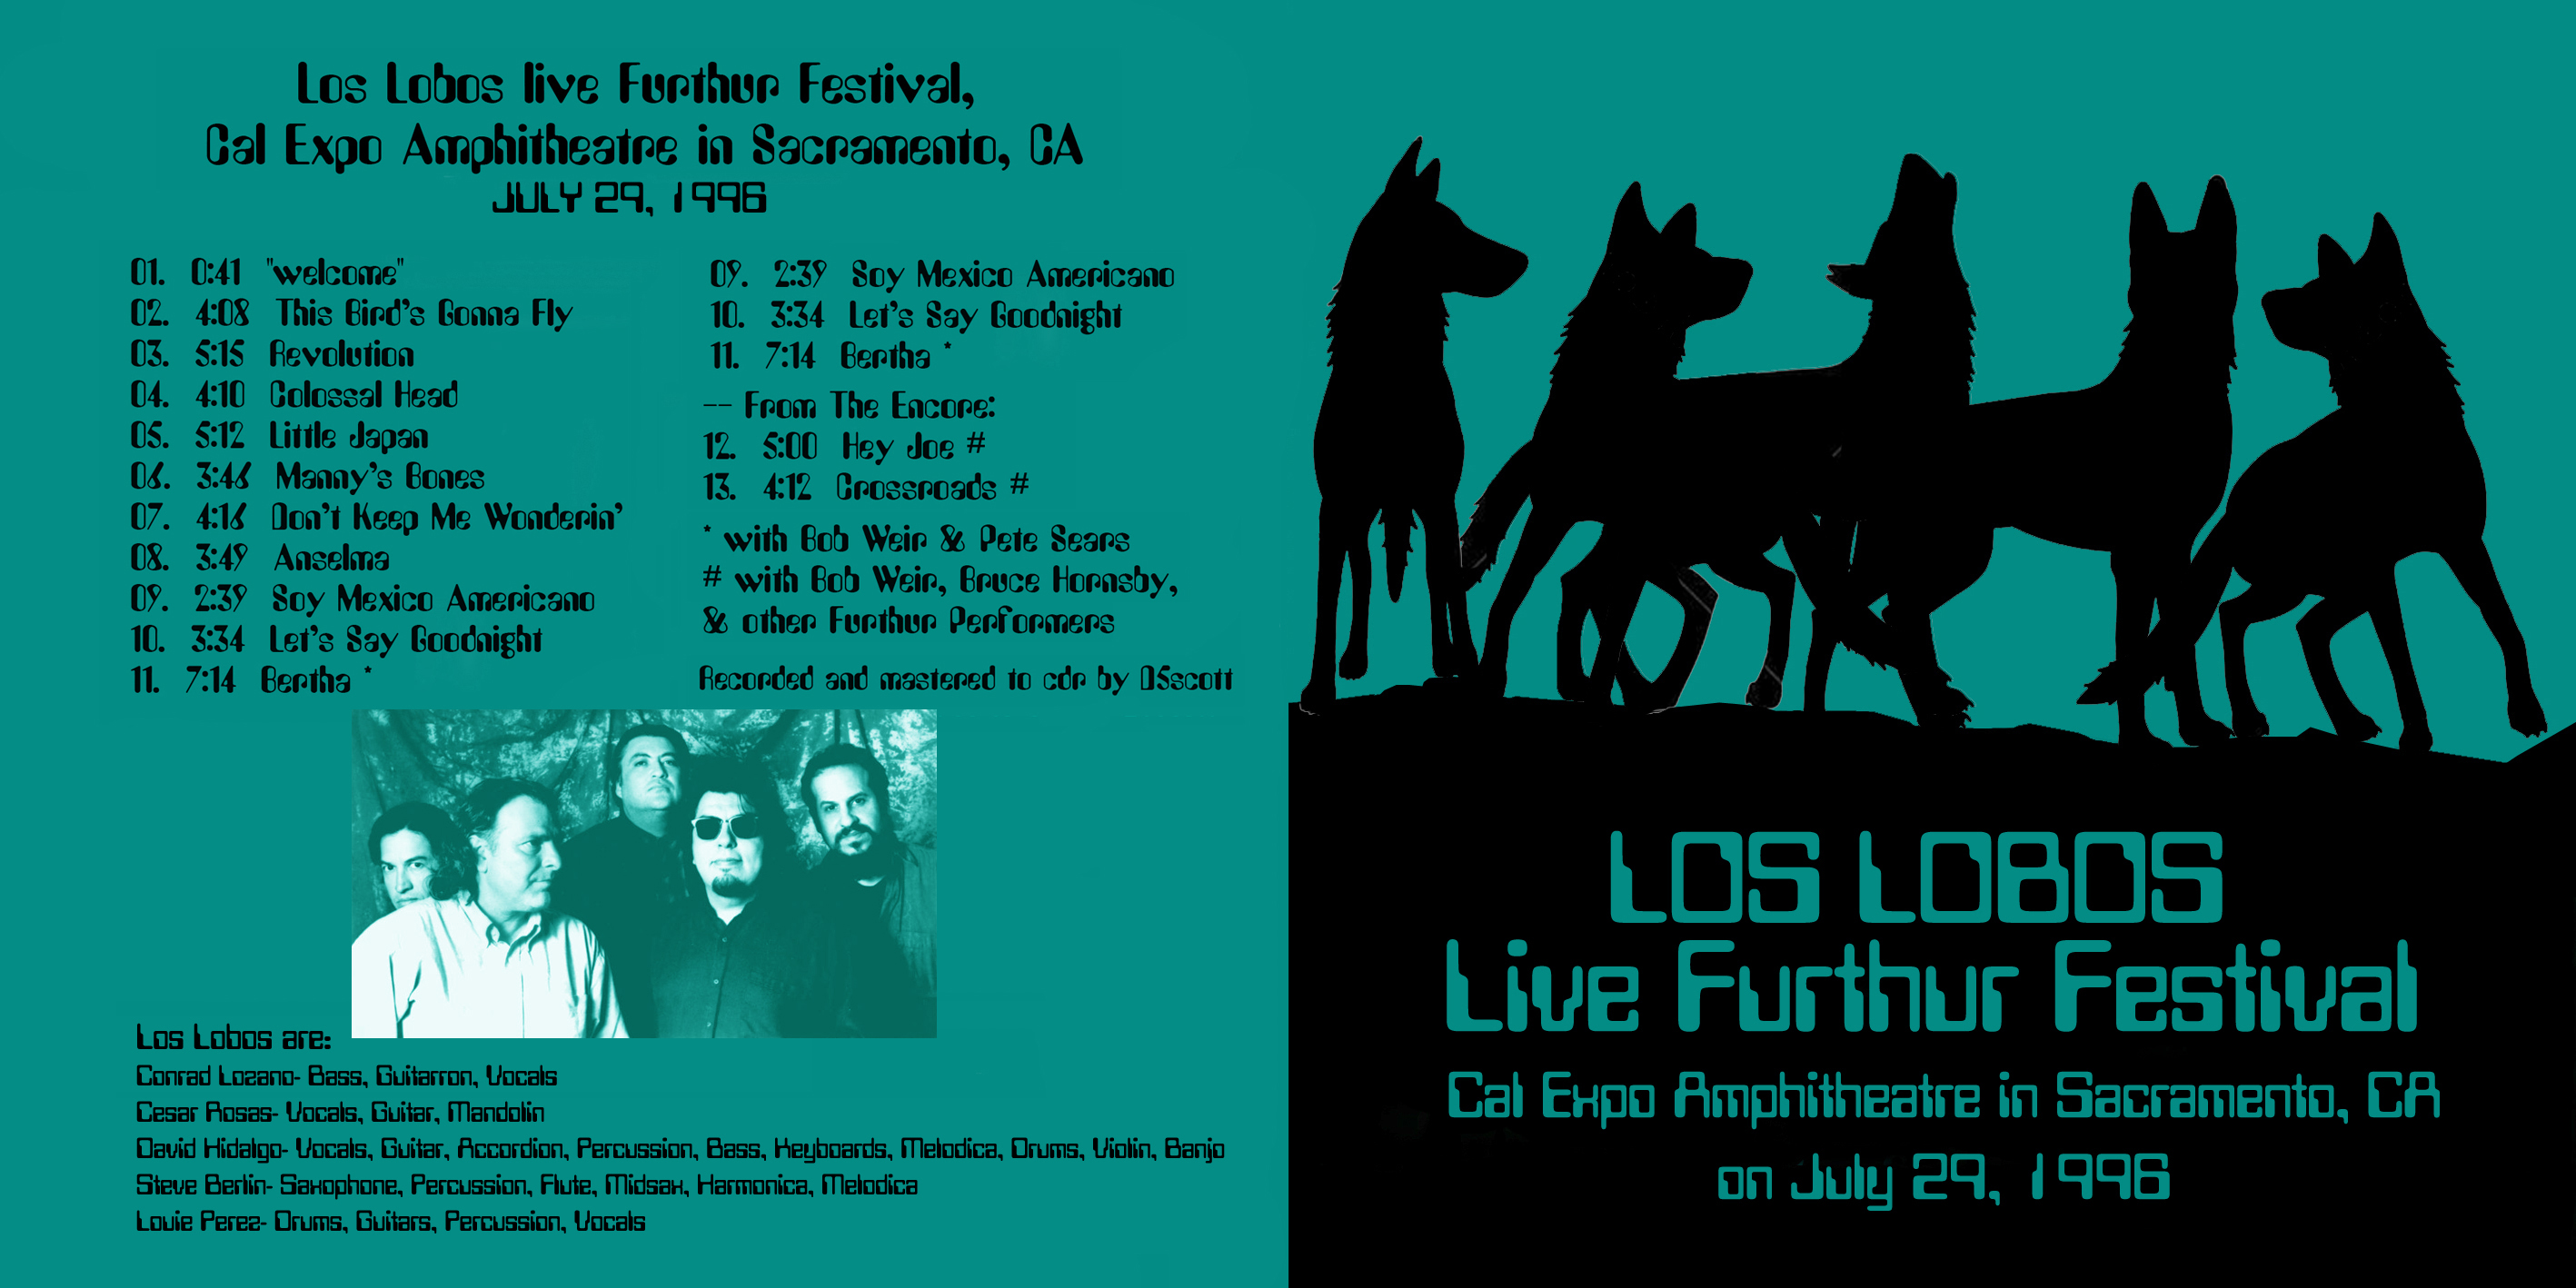 Los Lobos live cd at Furthur Festival calternate cover out